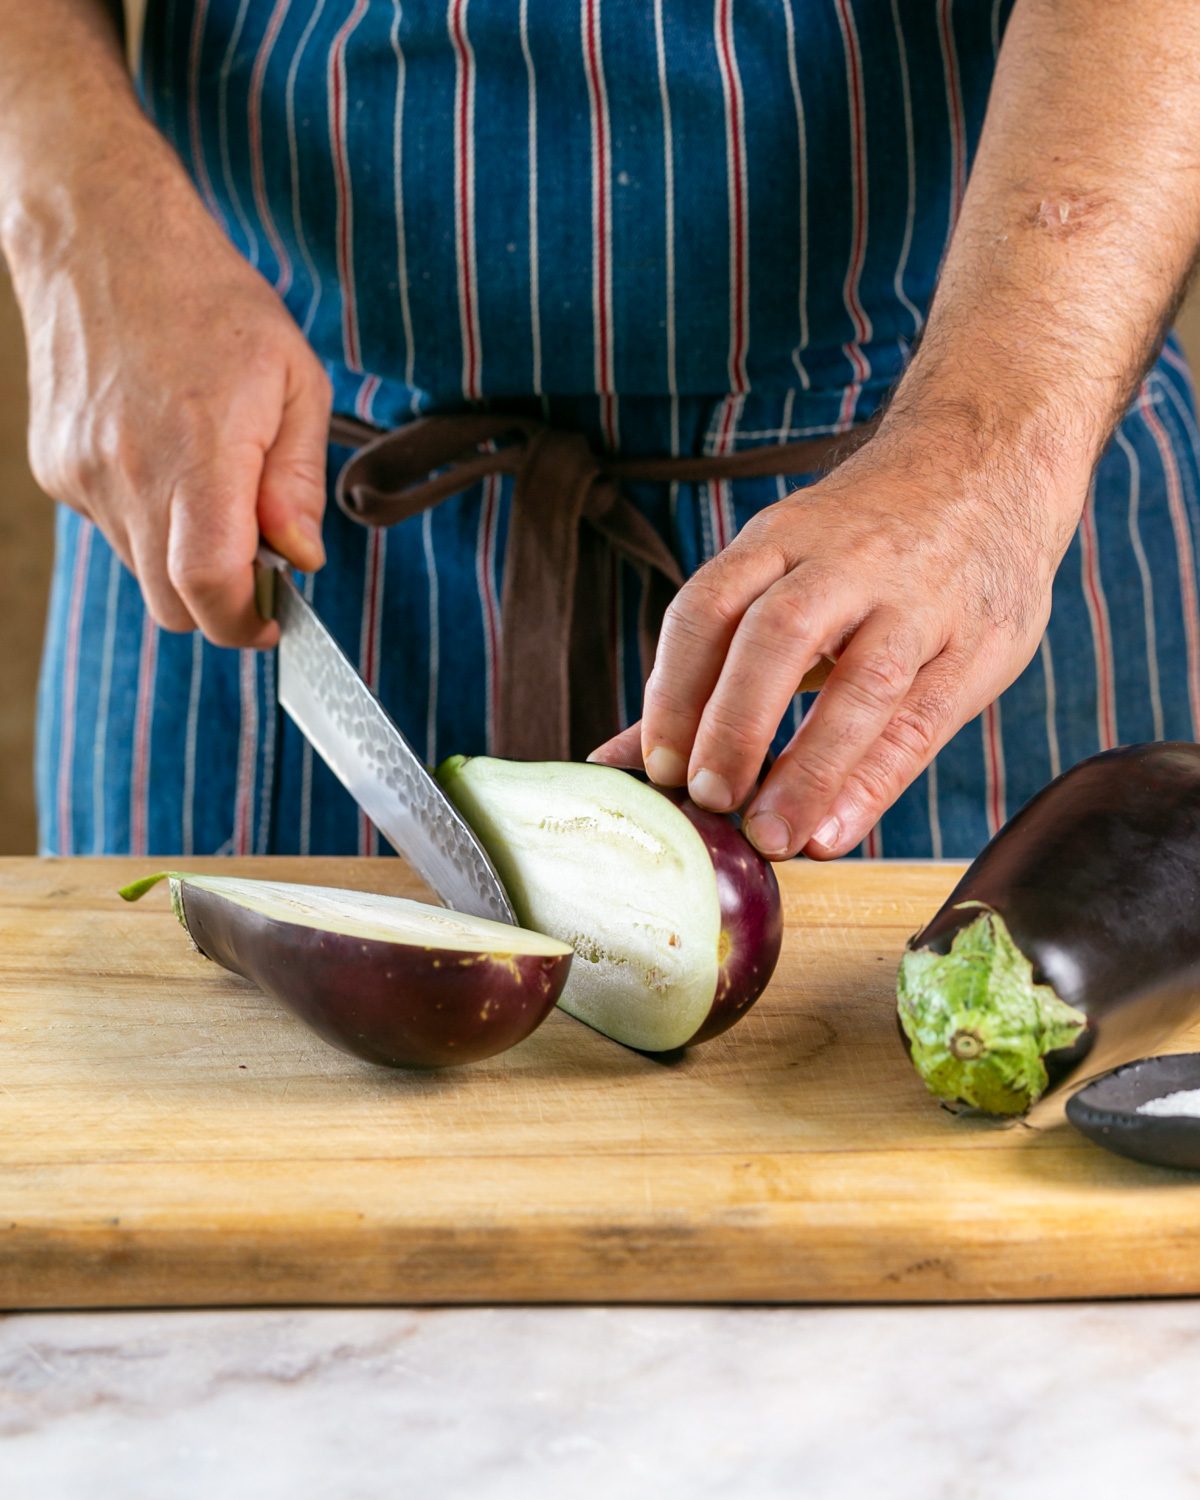 Cutting the eggplant in half